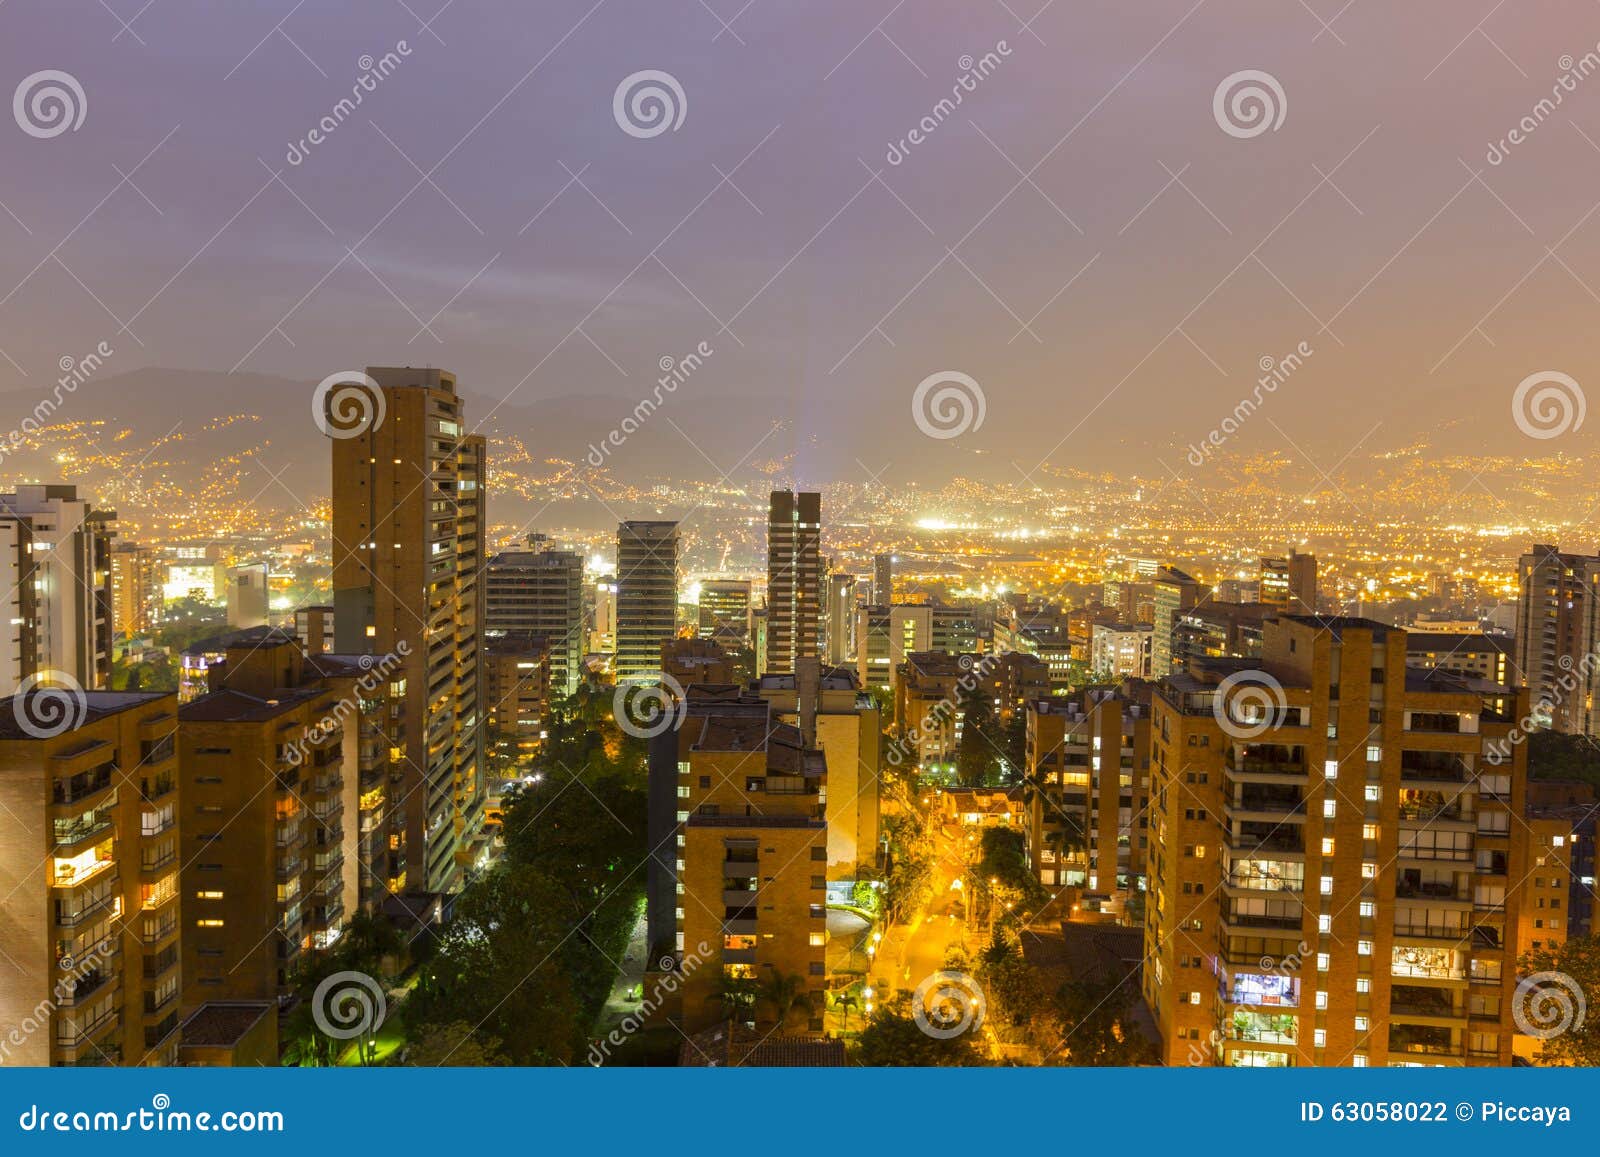 cityscape of medellin at night, colombia